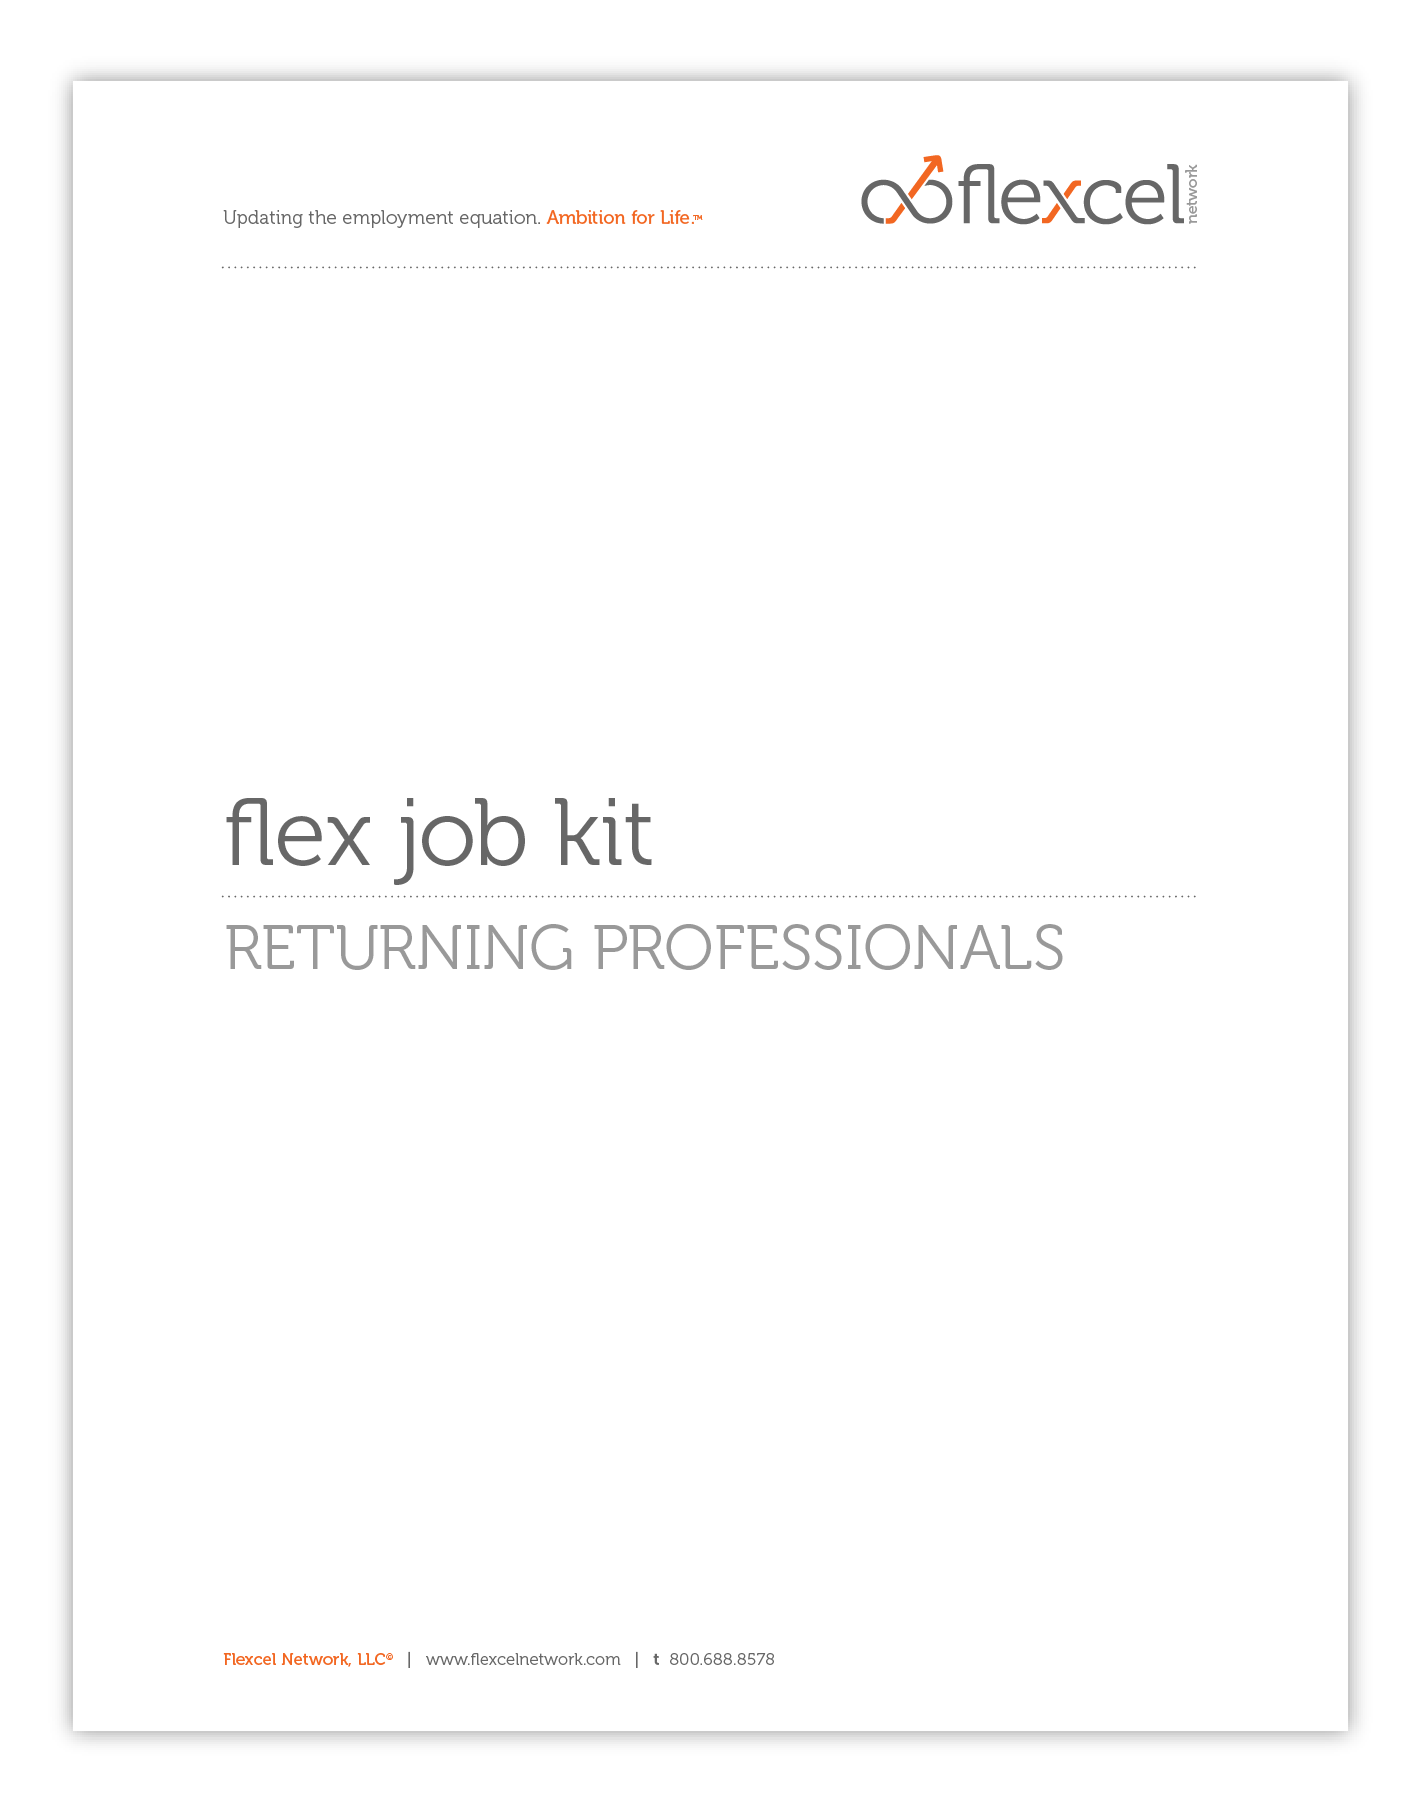 flexcel_kit_cover_pages_REV-01-01.png